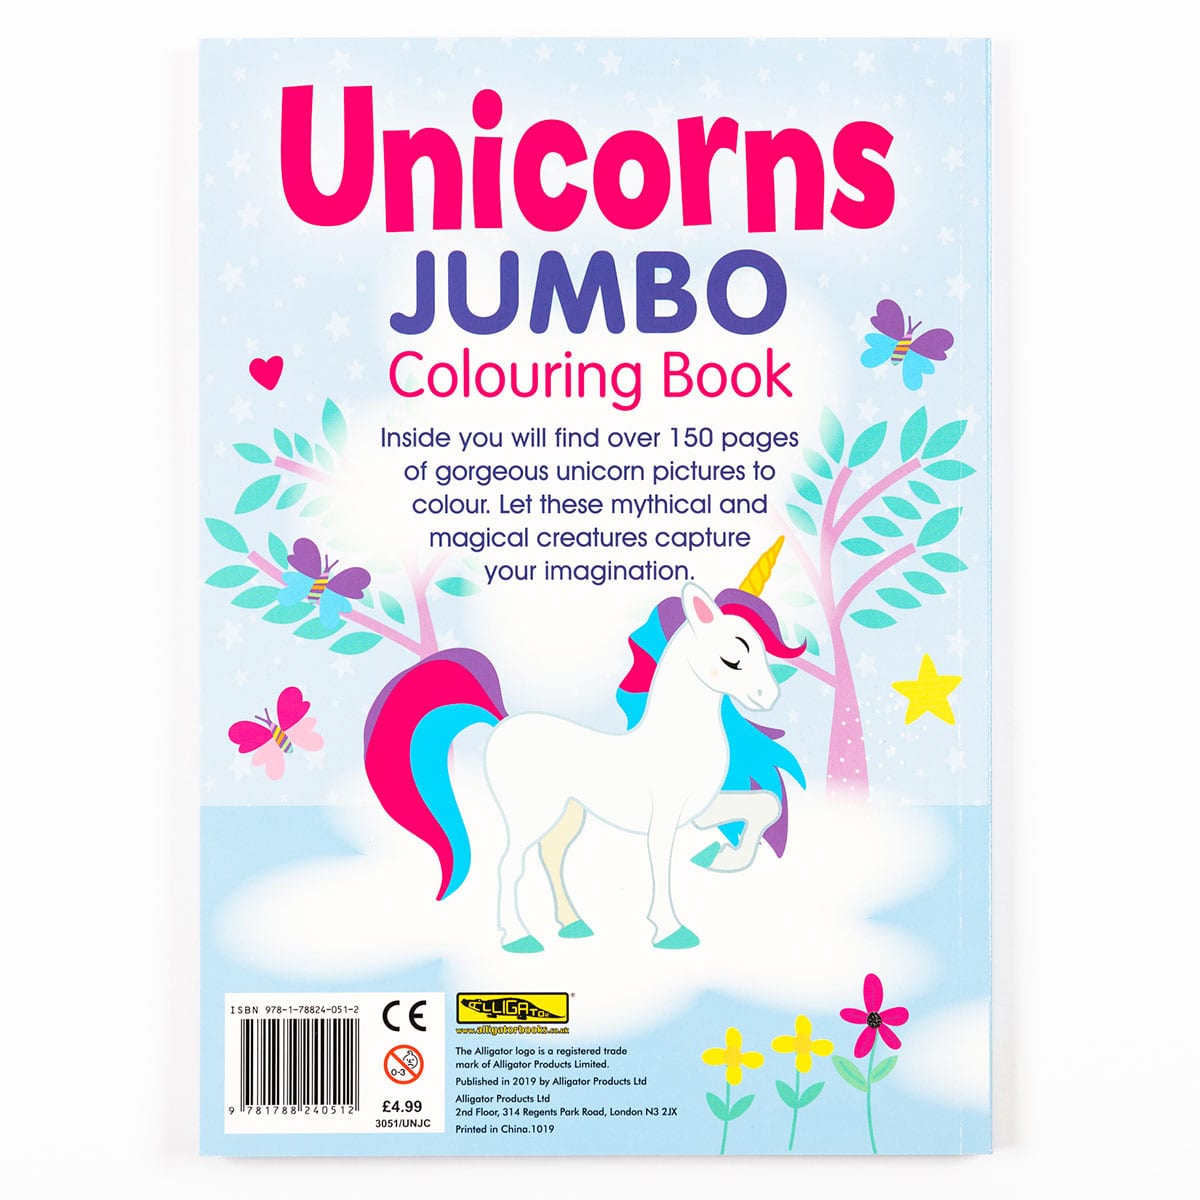 Unicorns Jumbo Colouring Book - The English Bookshop Kuwait